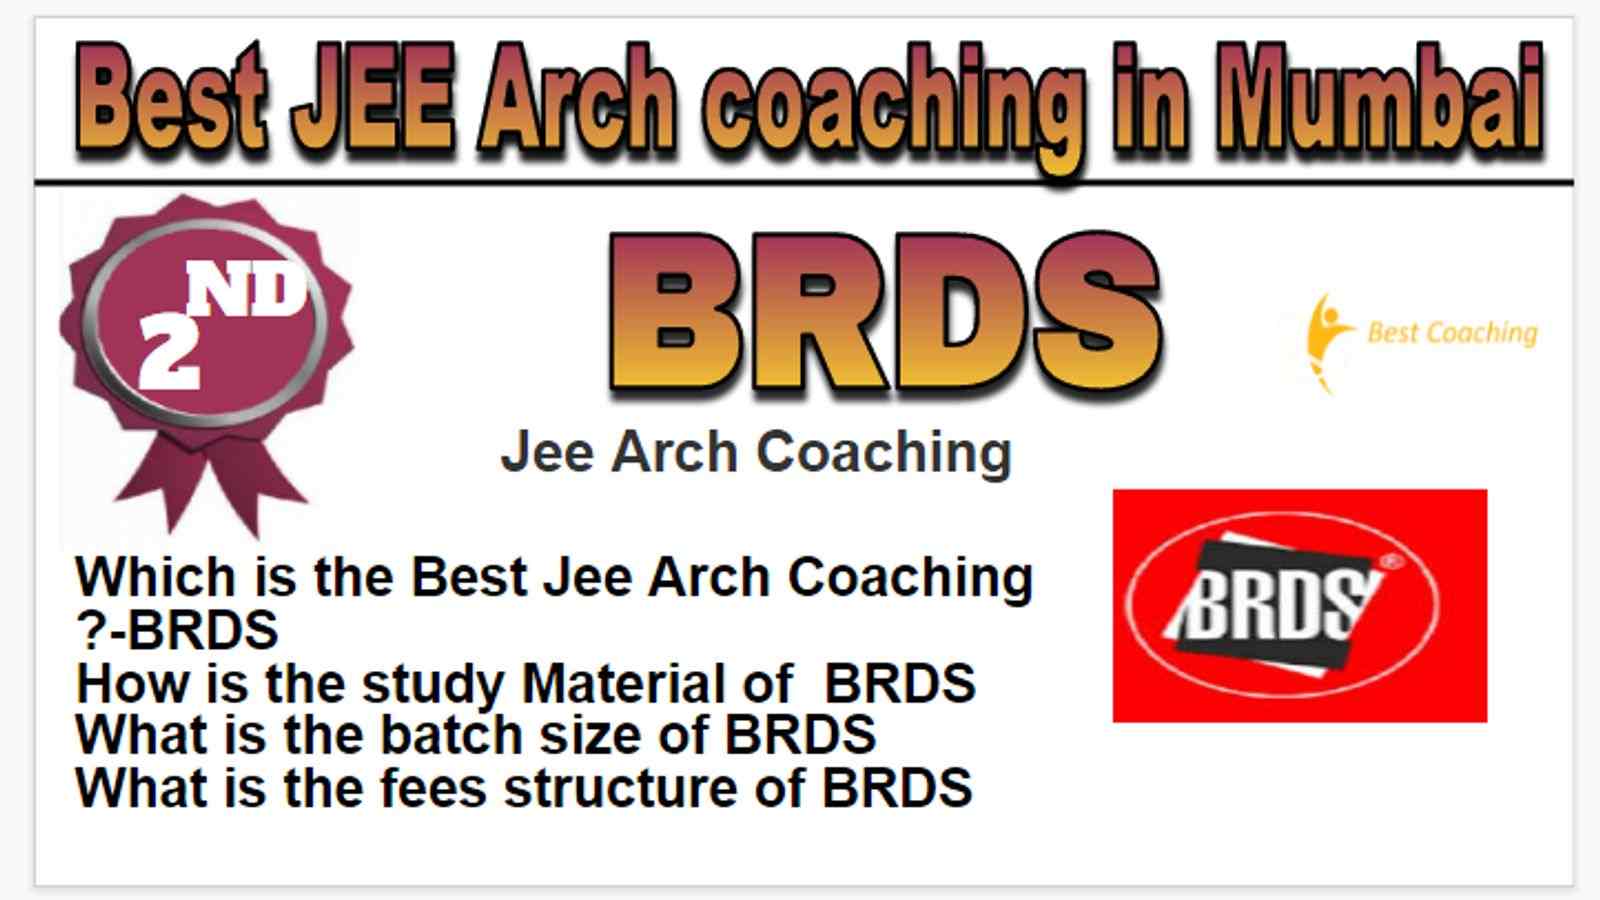 Rank 2 Best JEE Arch coaching in Mumbai